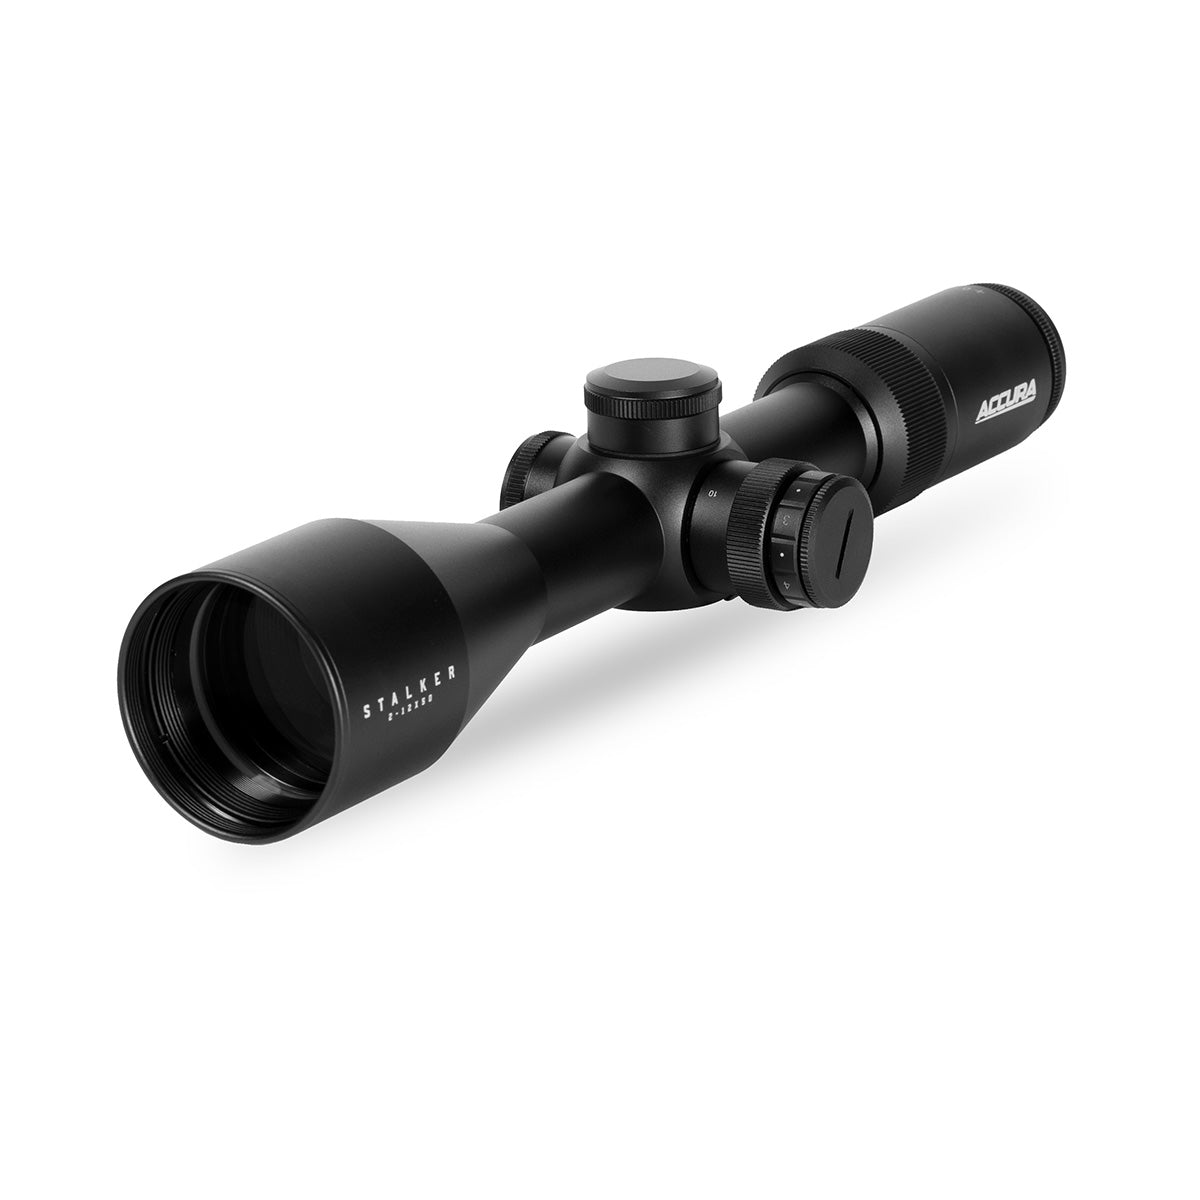 Accura Stalker illuminated rifle scope, black , lightweight, weatherproof construction